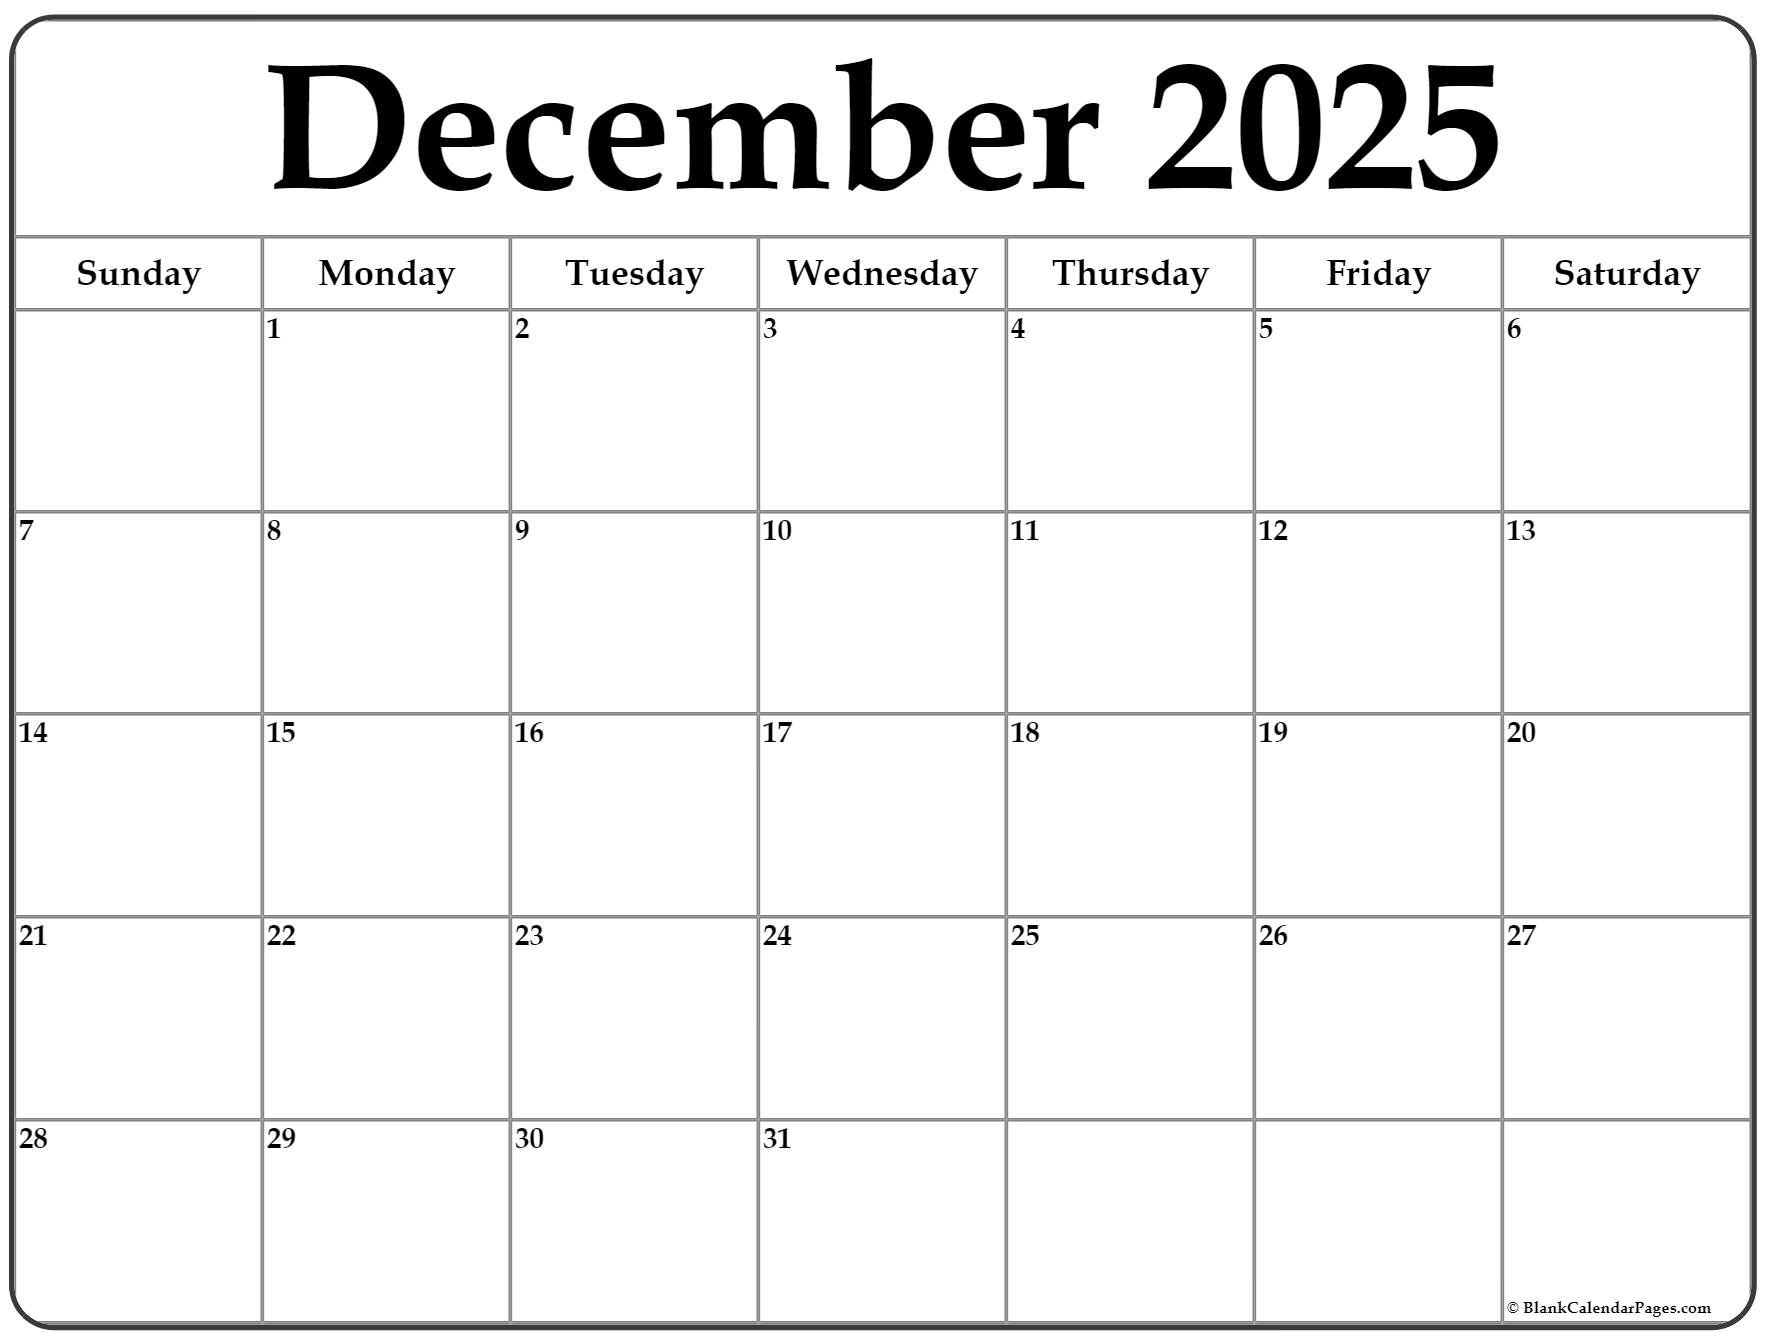 December 2025 Calendar To Write On 